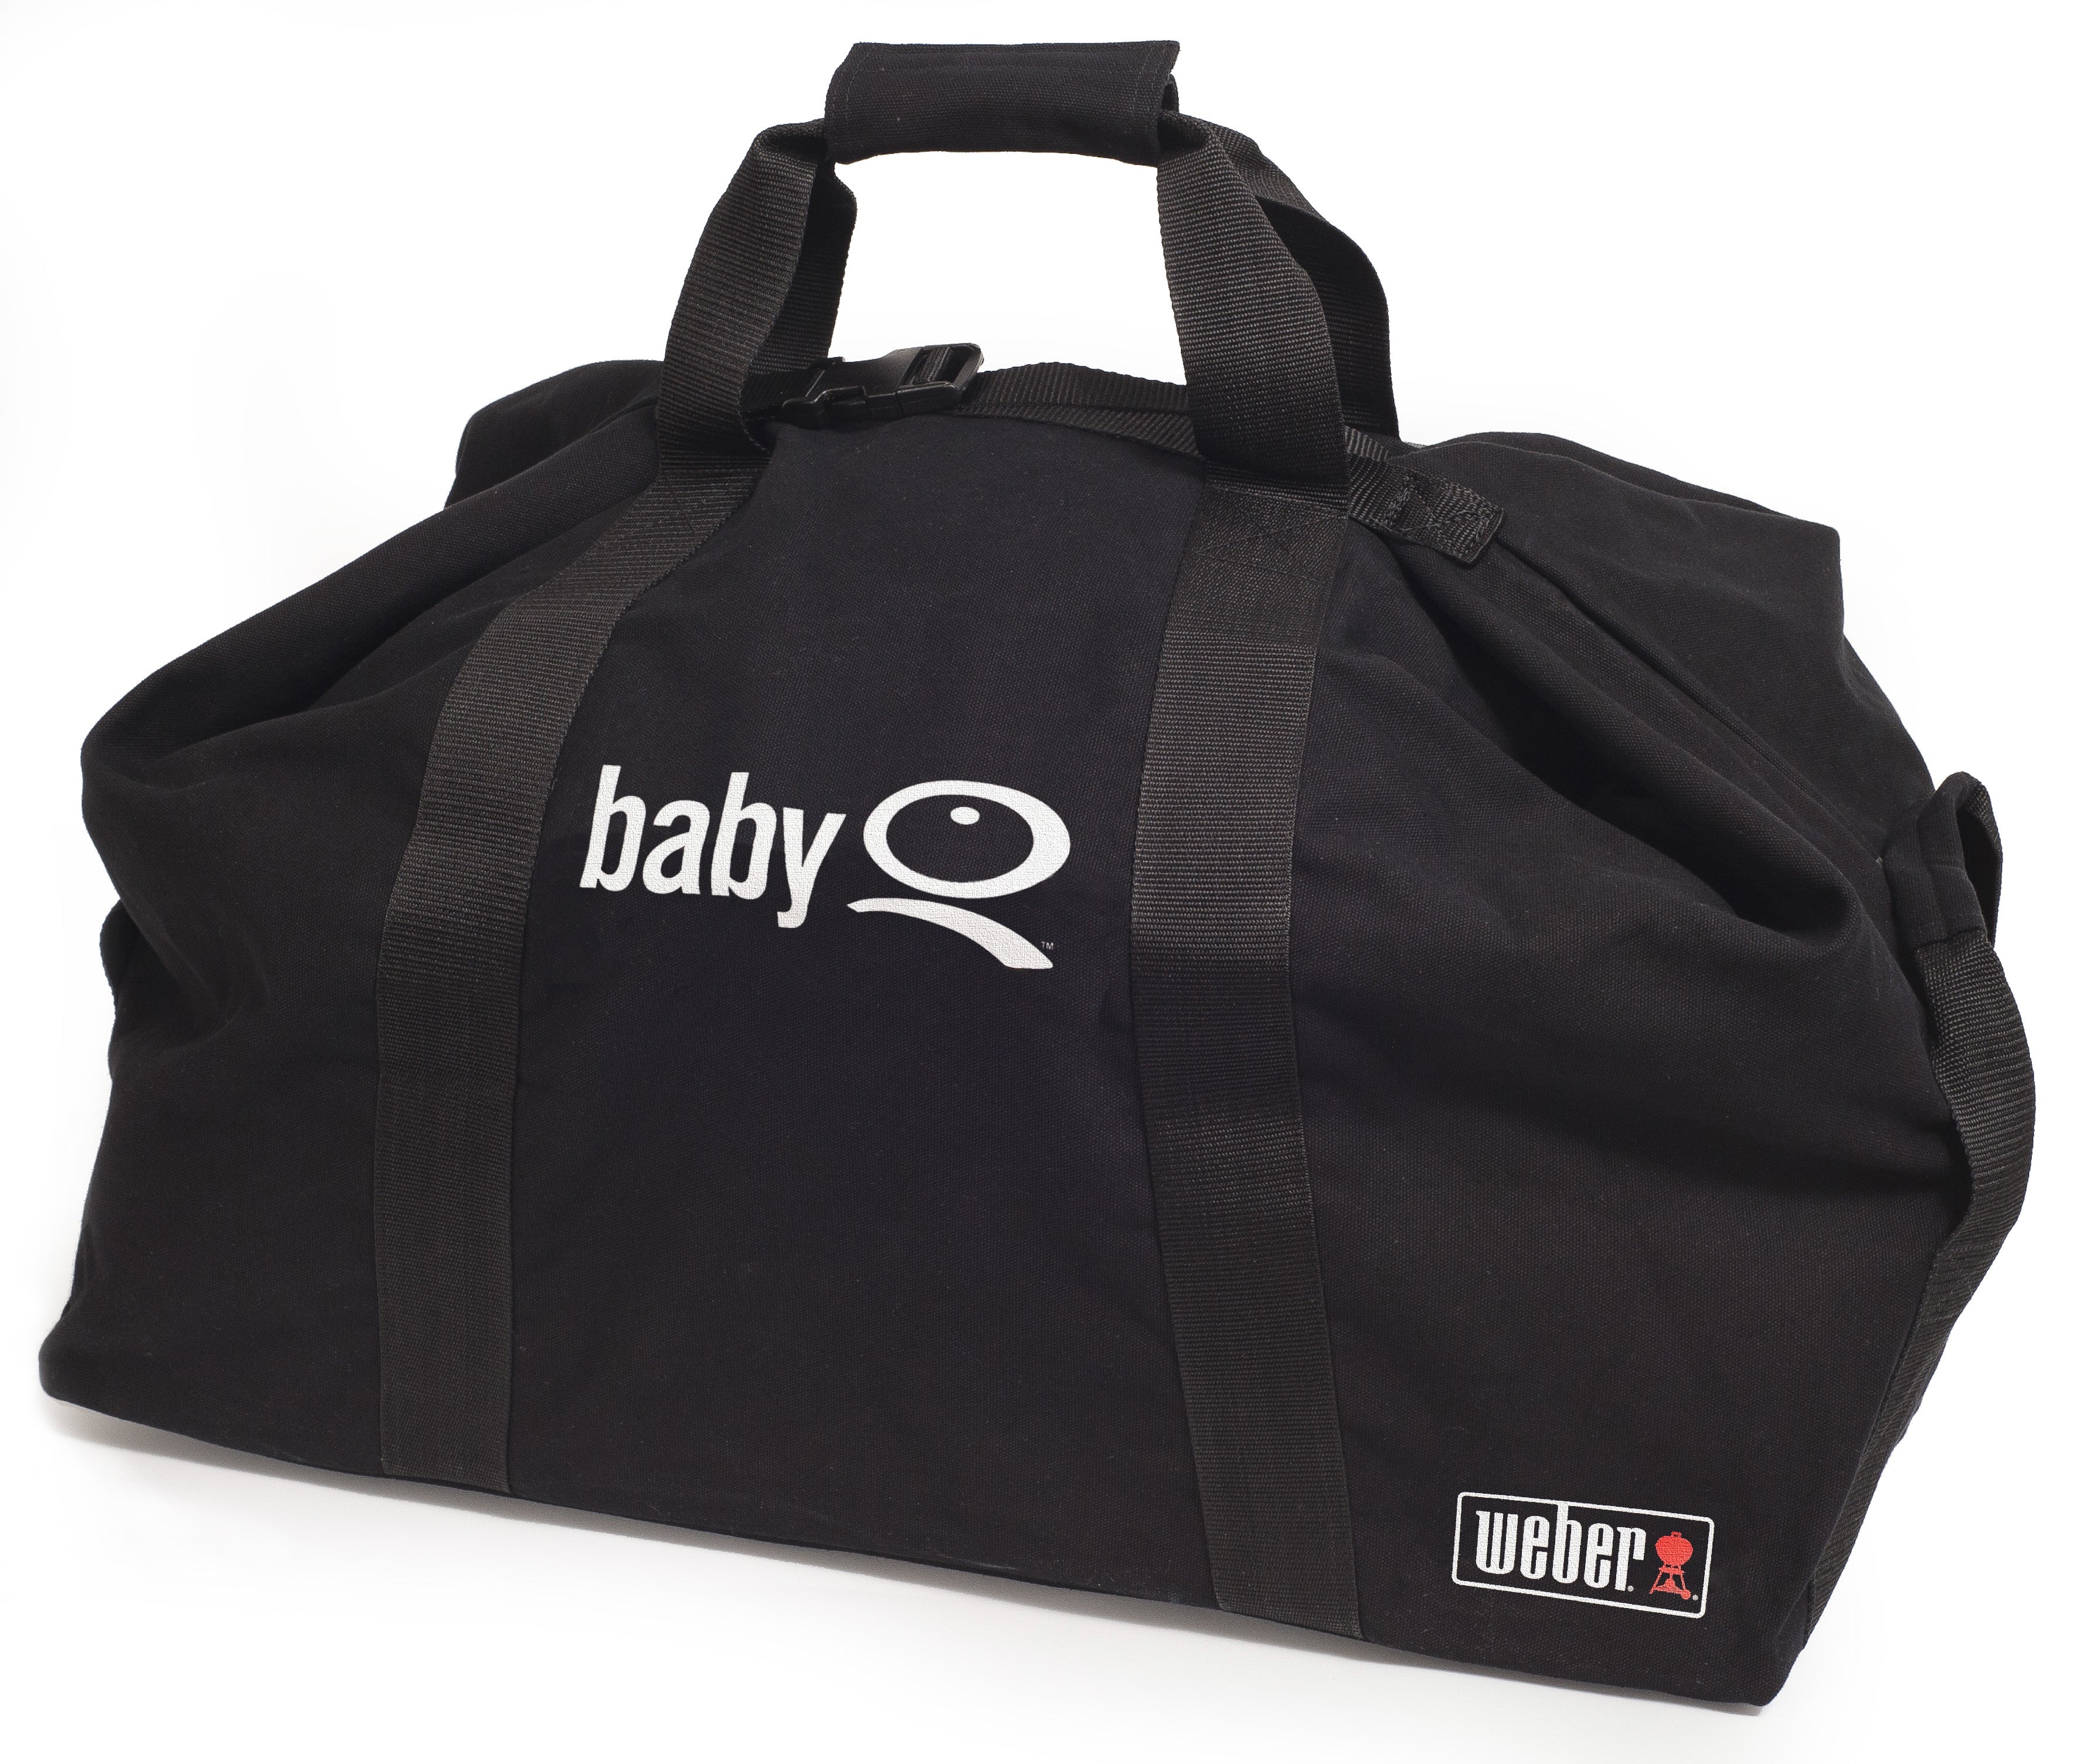 Baby Q Duffle Bag